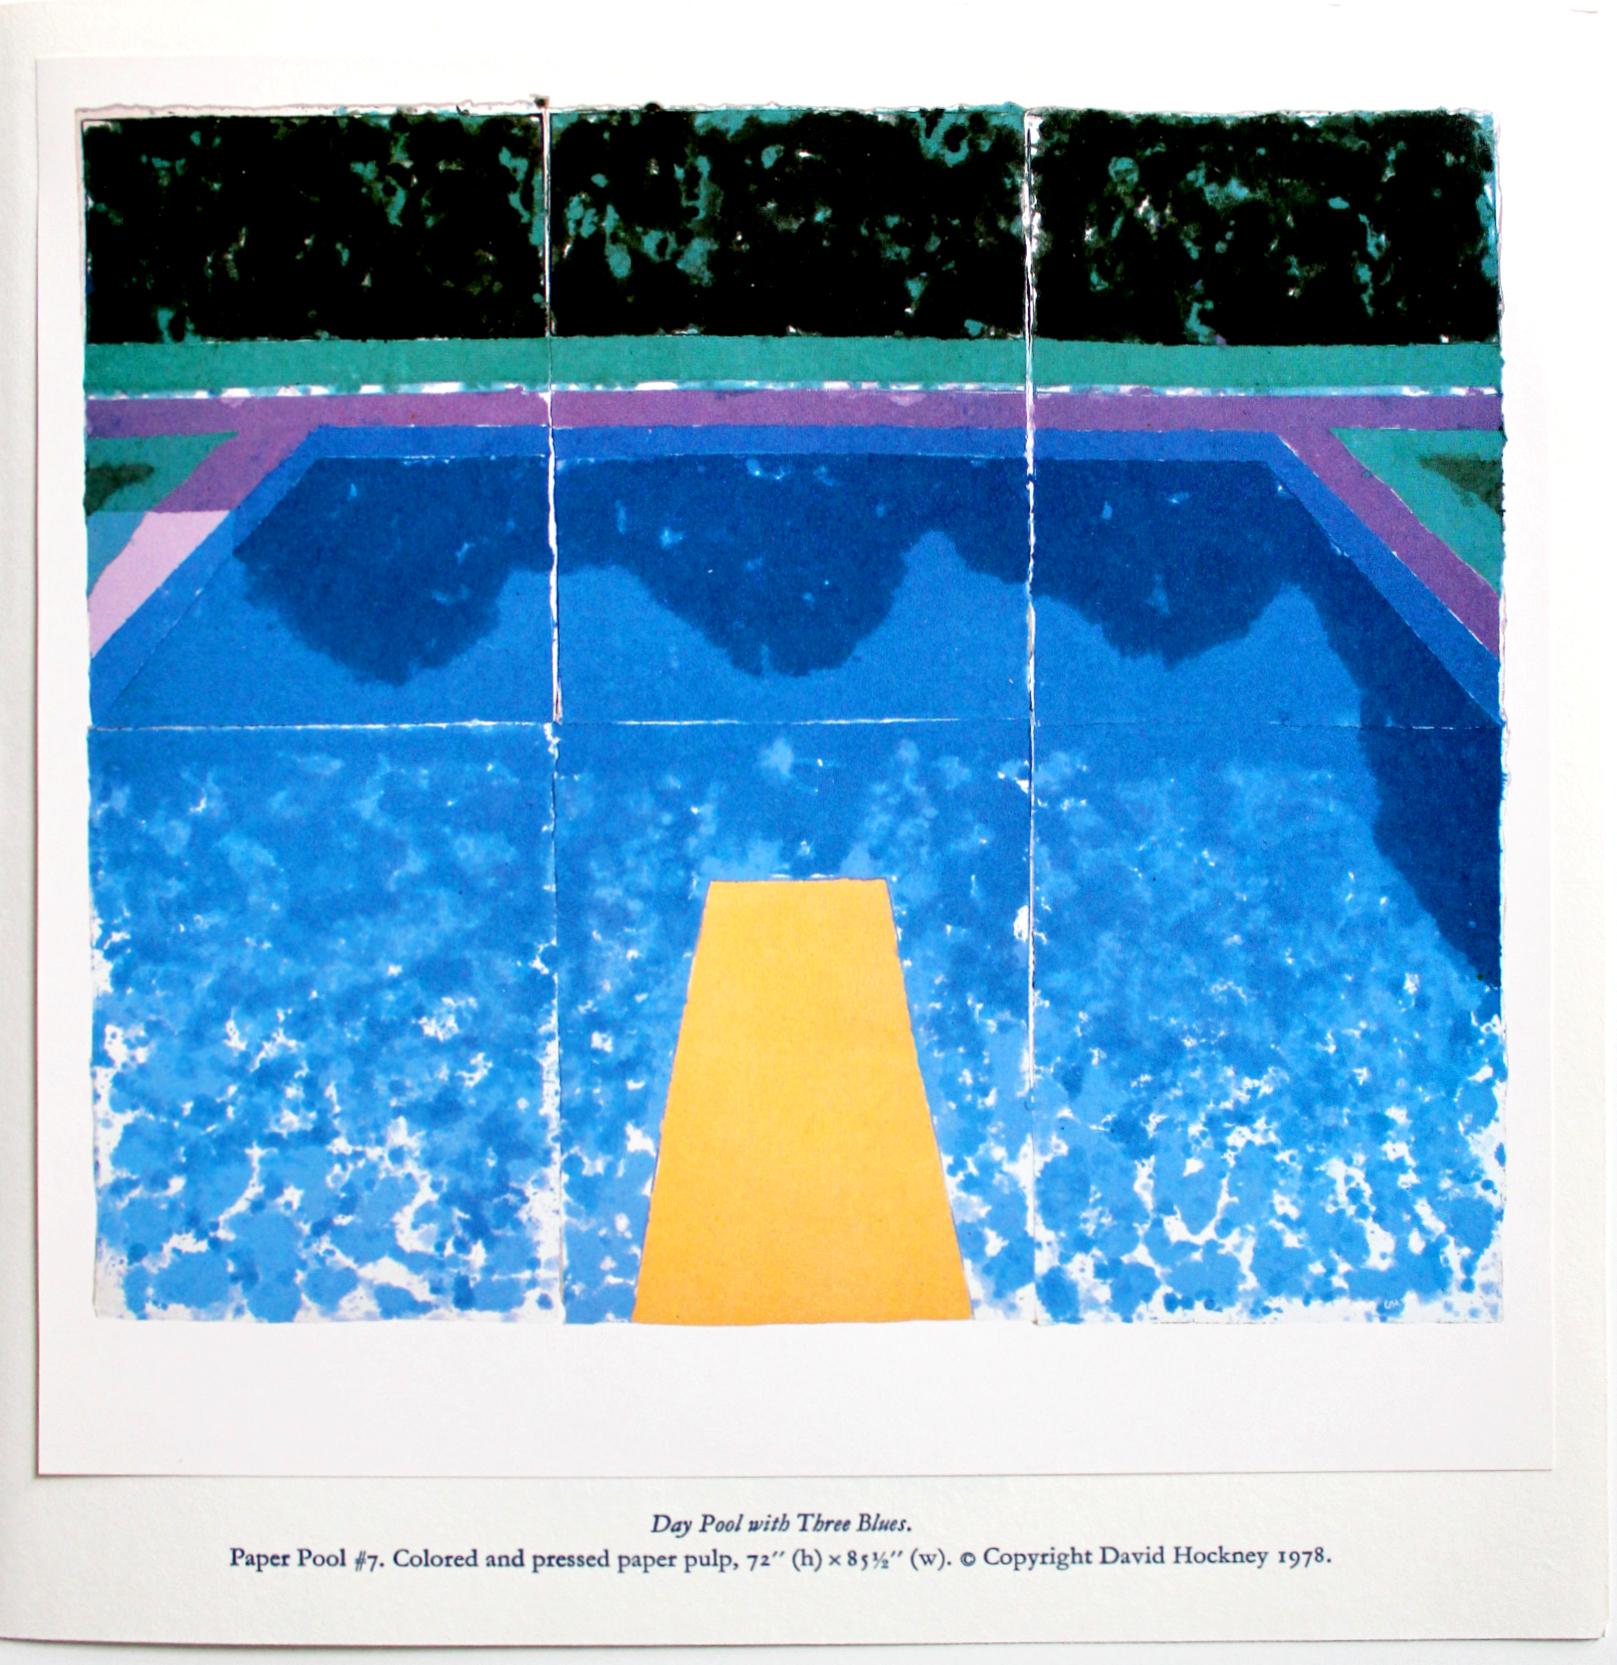 Invitation Paper Pools - Contemporain Art par David Hockney